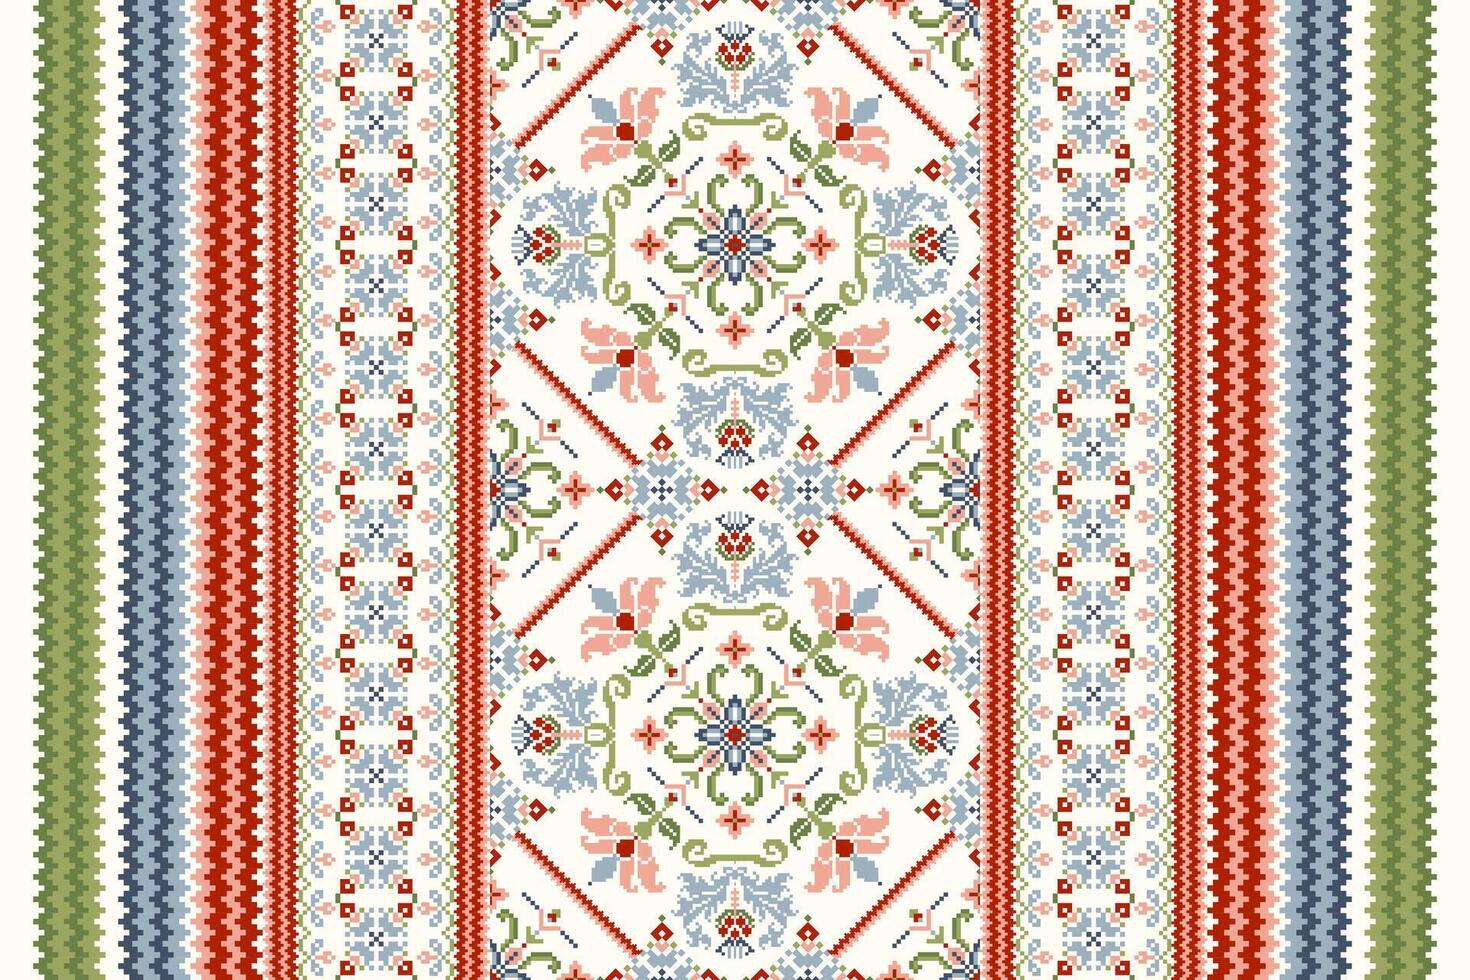 geometrisk etnisk orientalisk mönster vektor illustration.floral pixel konst broderi på vit bakgrund, aztek stil, abstrakt bakgrund.design för textur, tyg, kläder, inslagning, dekoration, halsduk, tryck